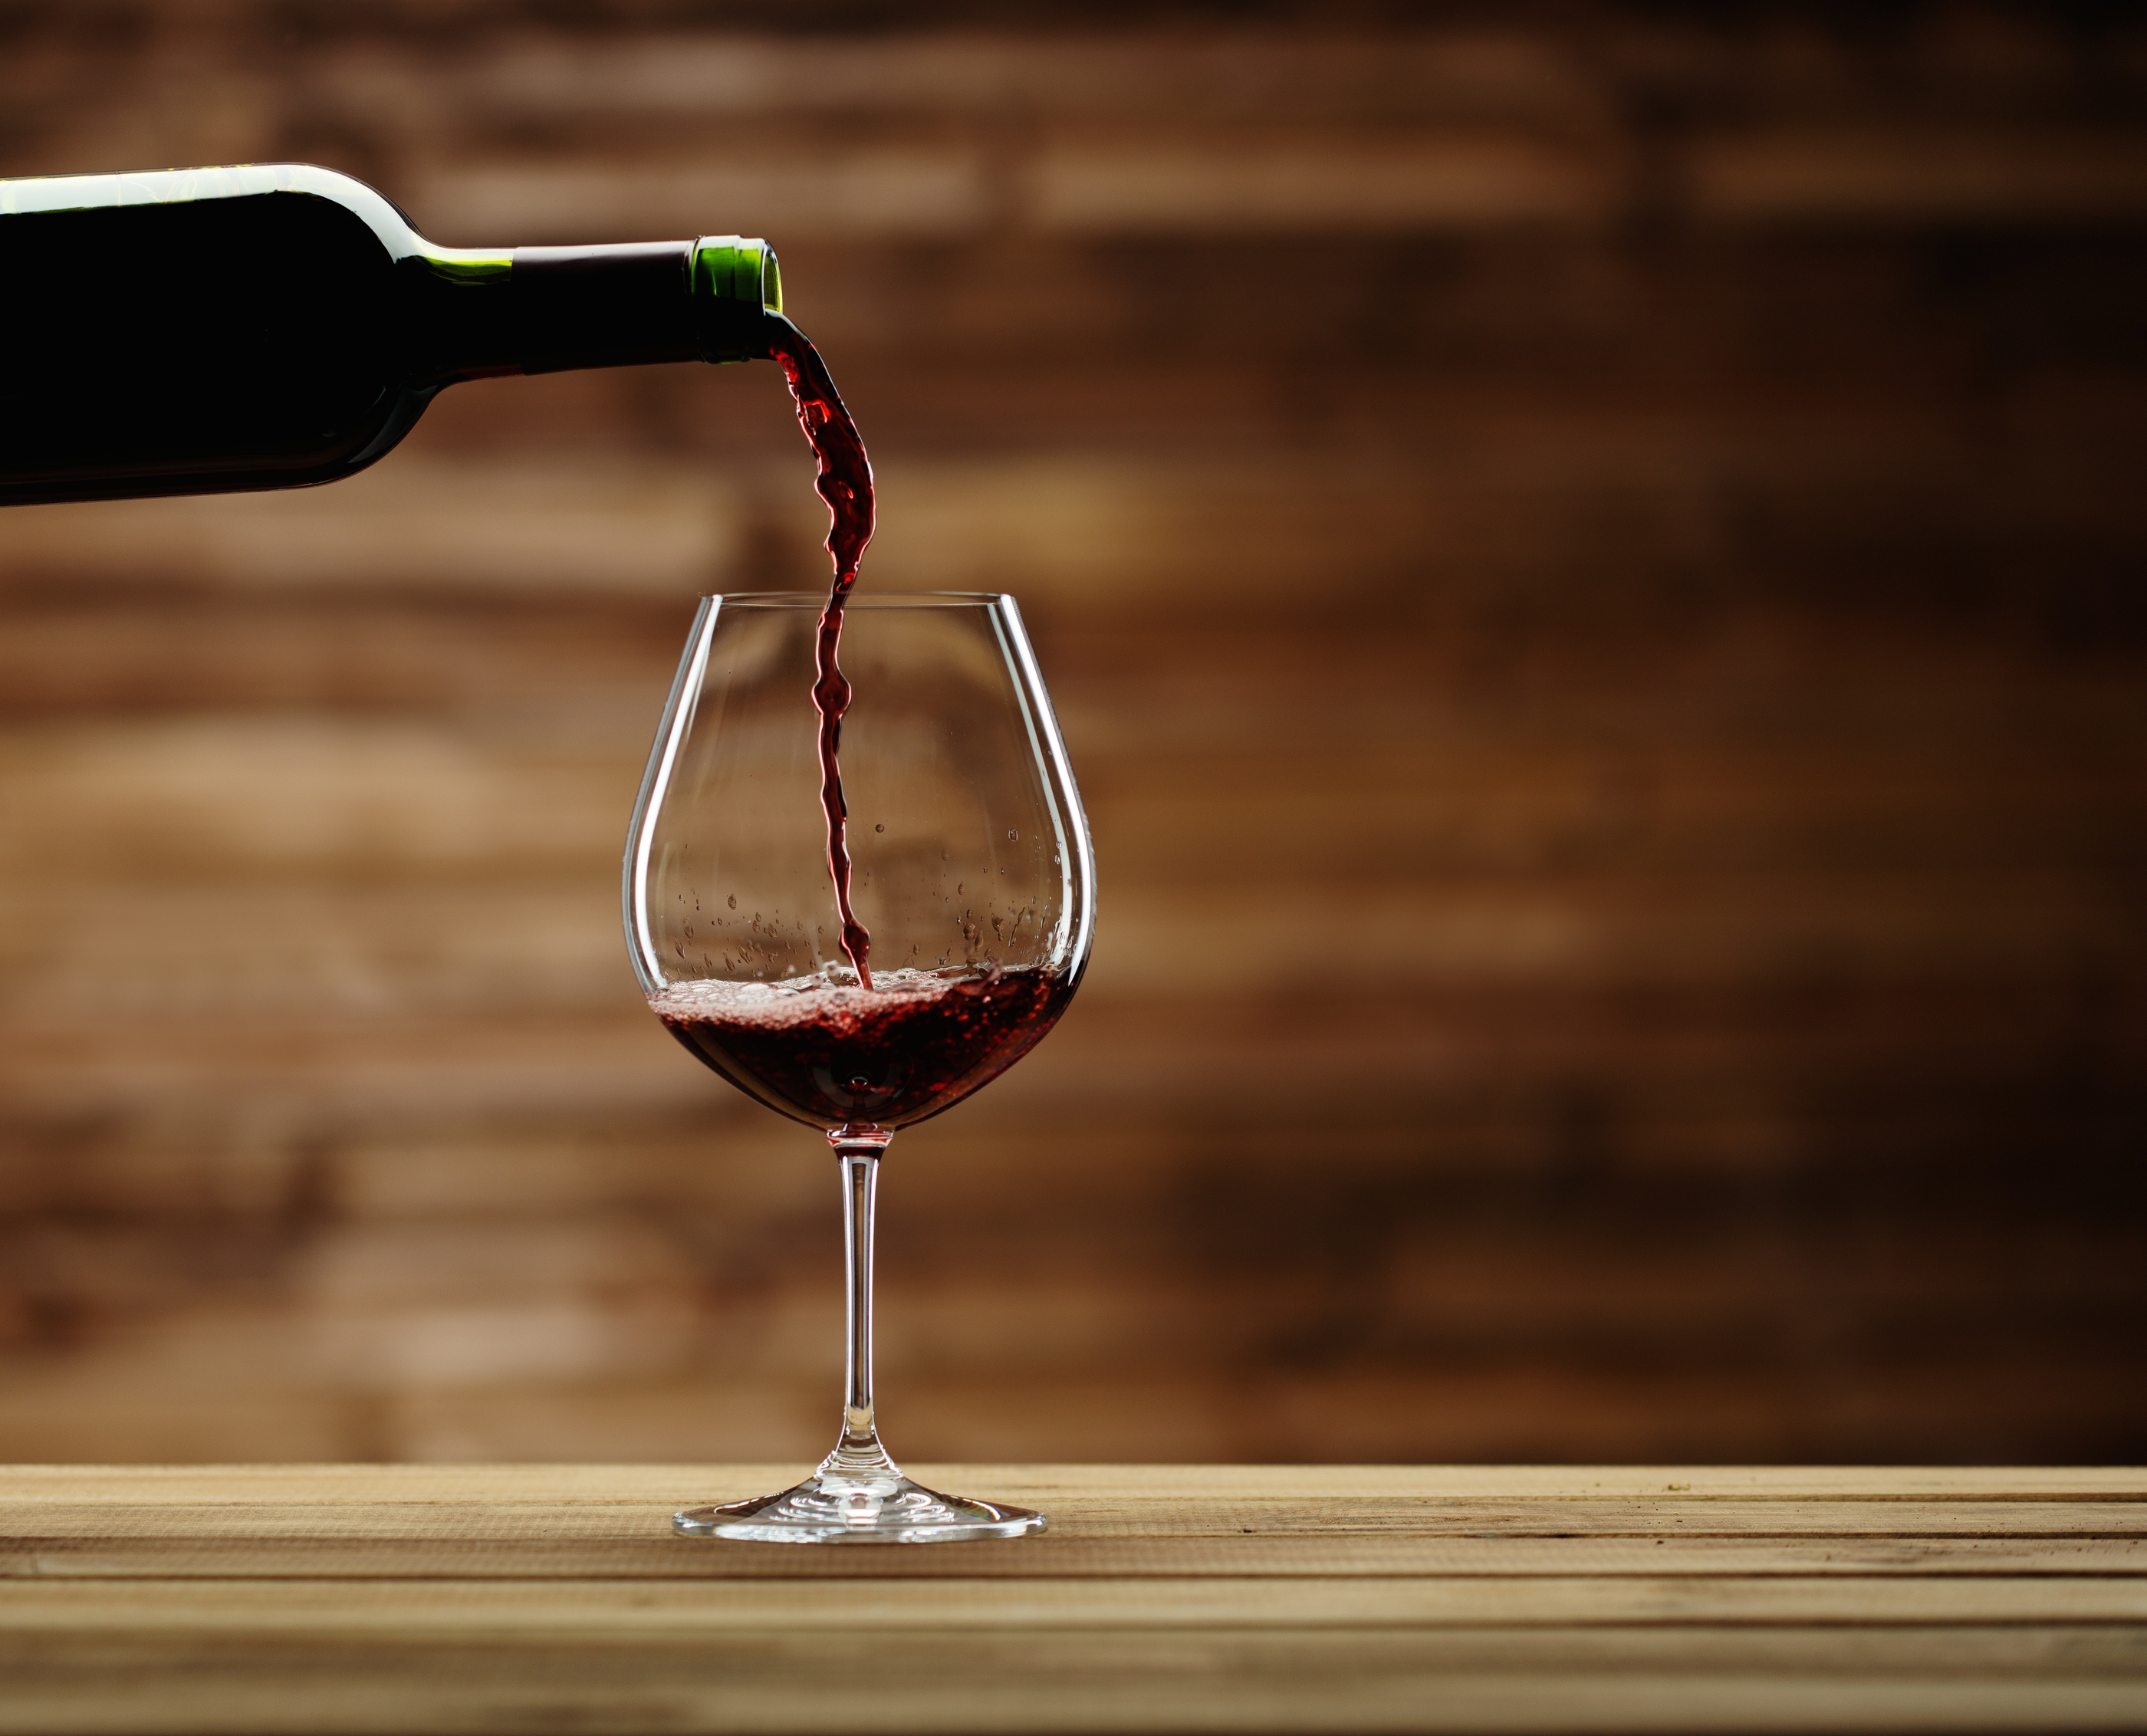 winemaker in tax trouble